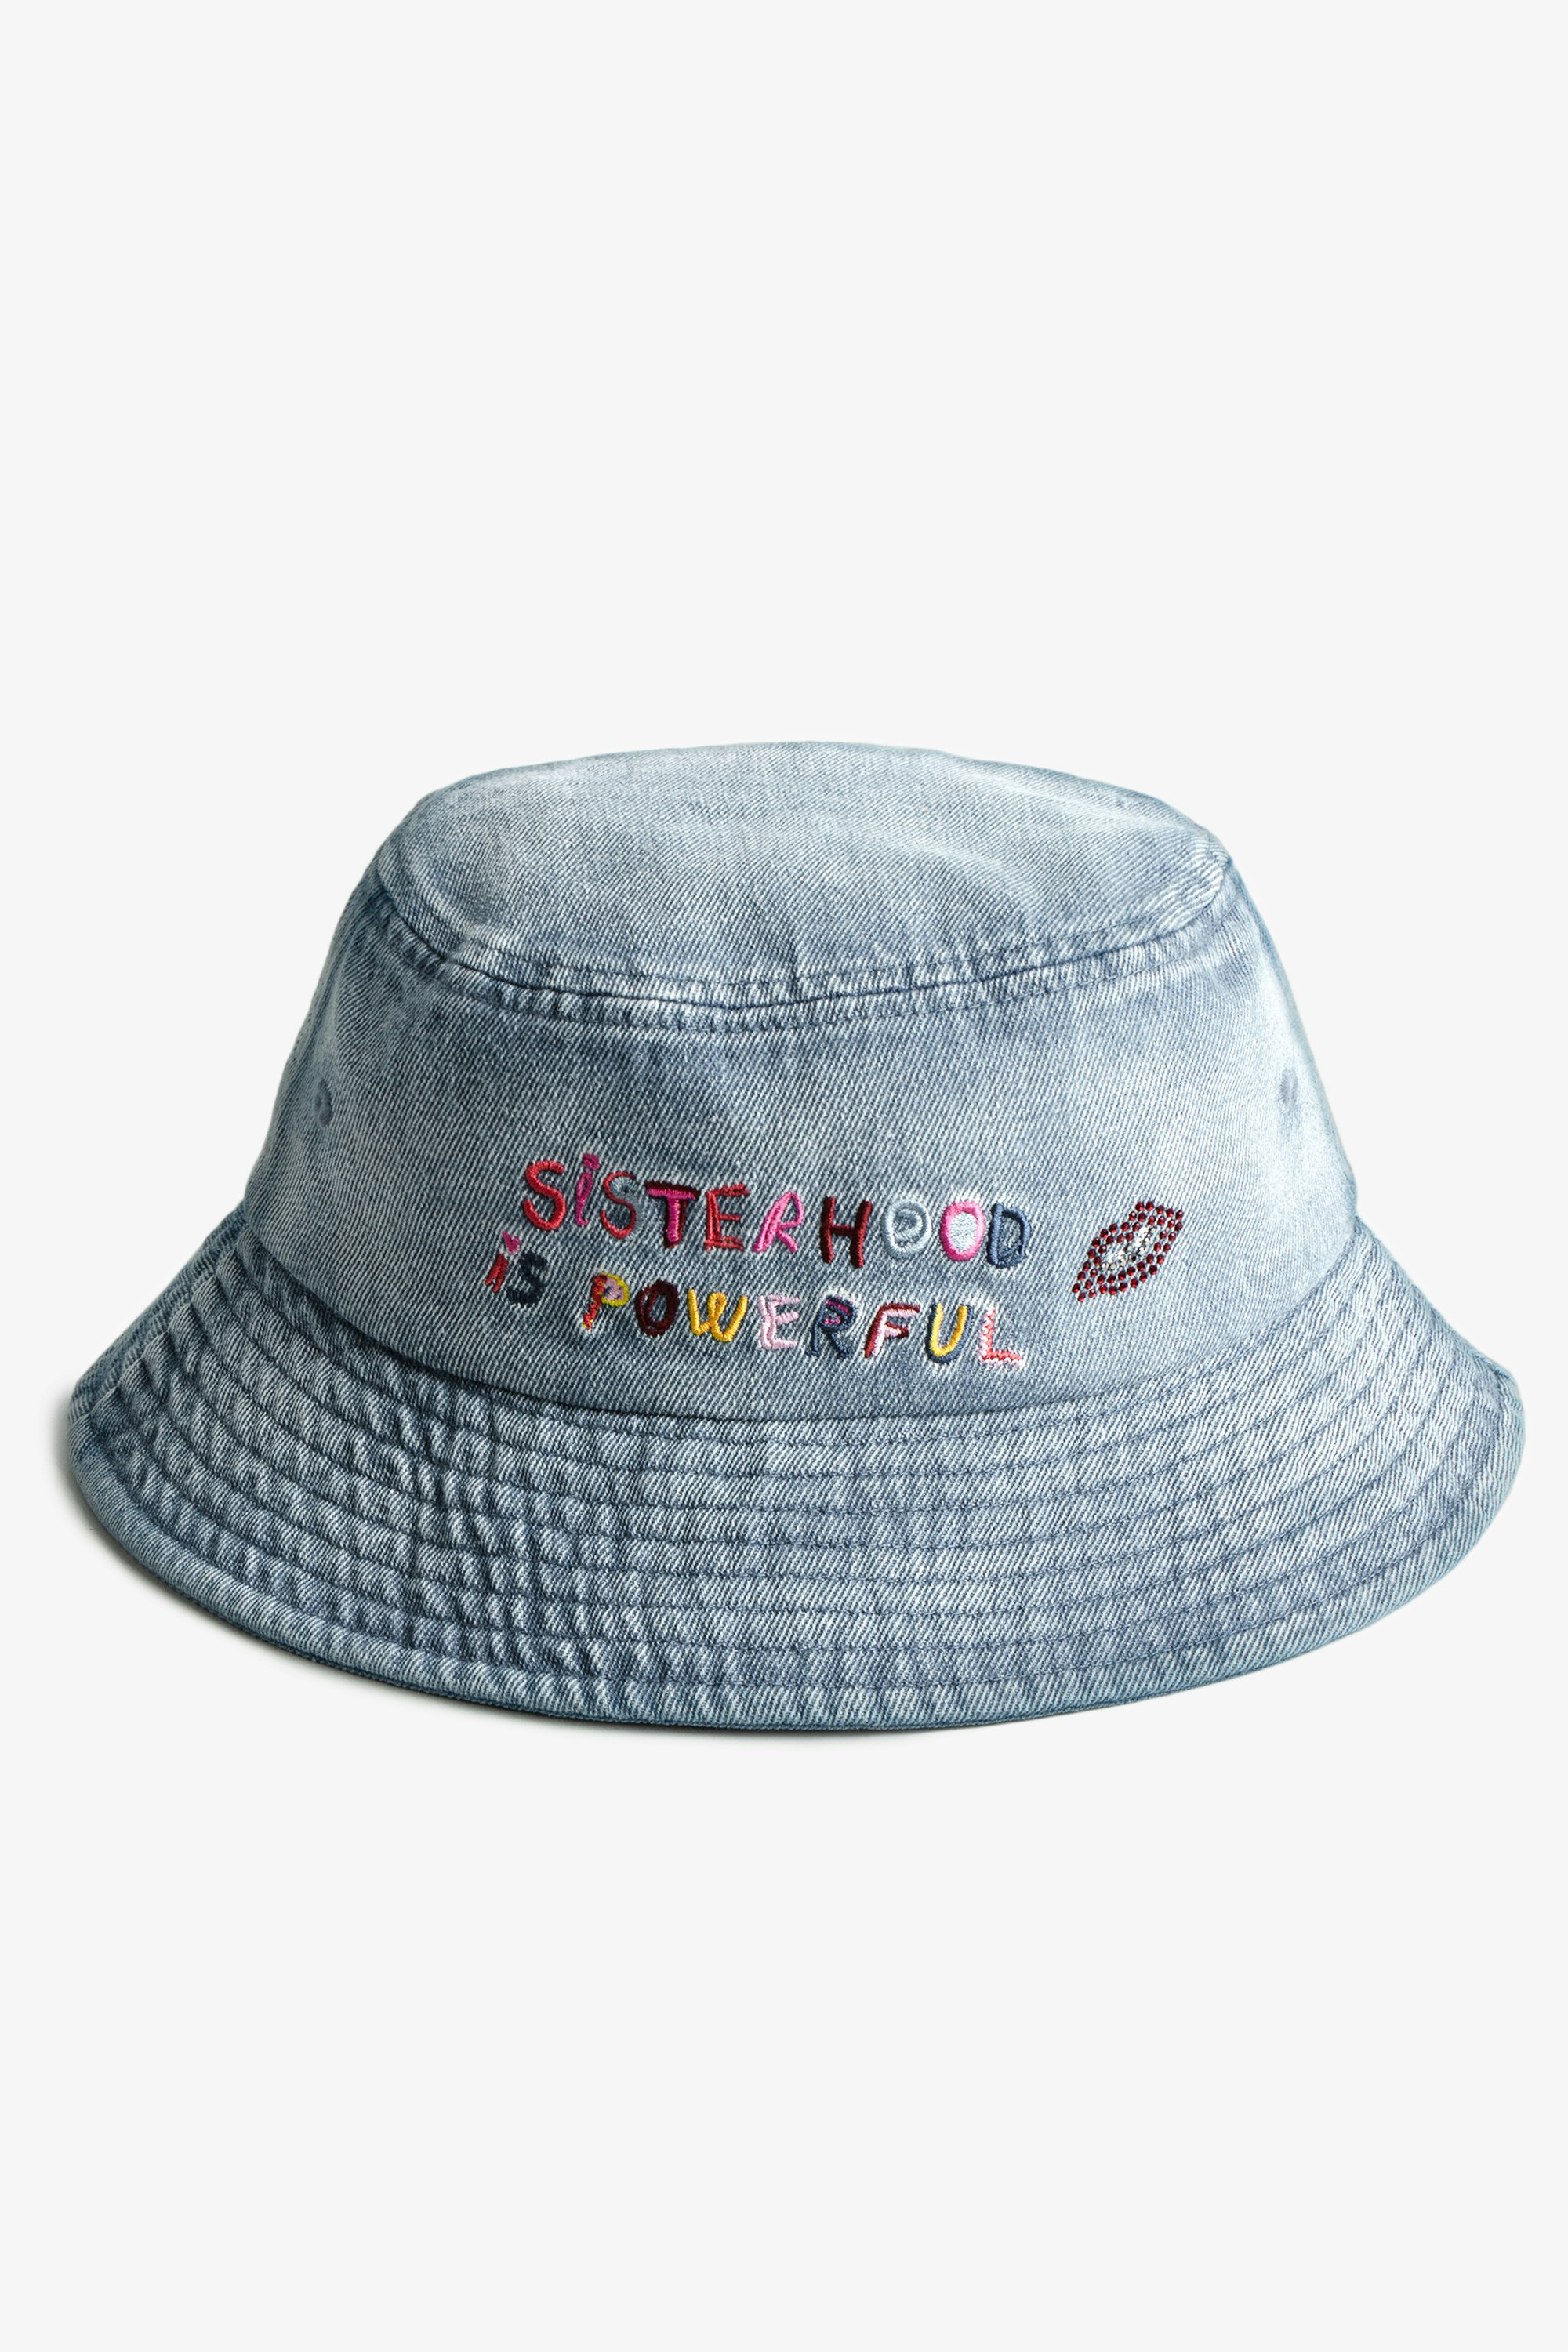 Band of Sisters Bucket 帽子 Women’s light blue cotton bucket hat with Band of Sisters embroidery